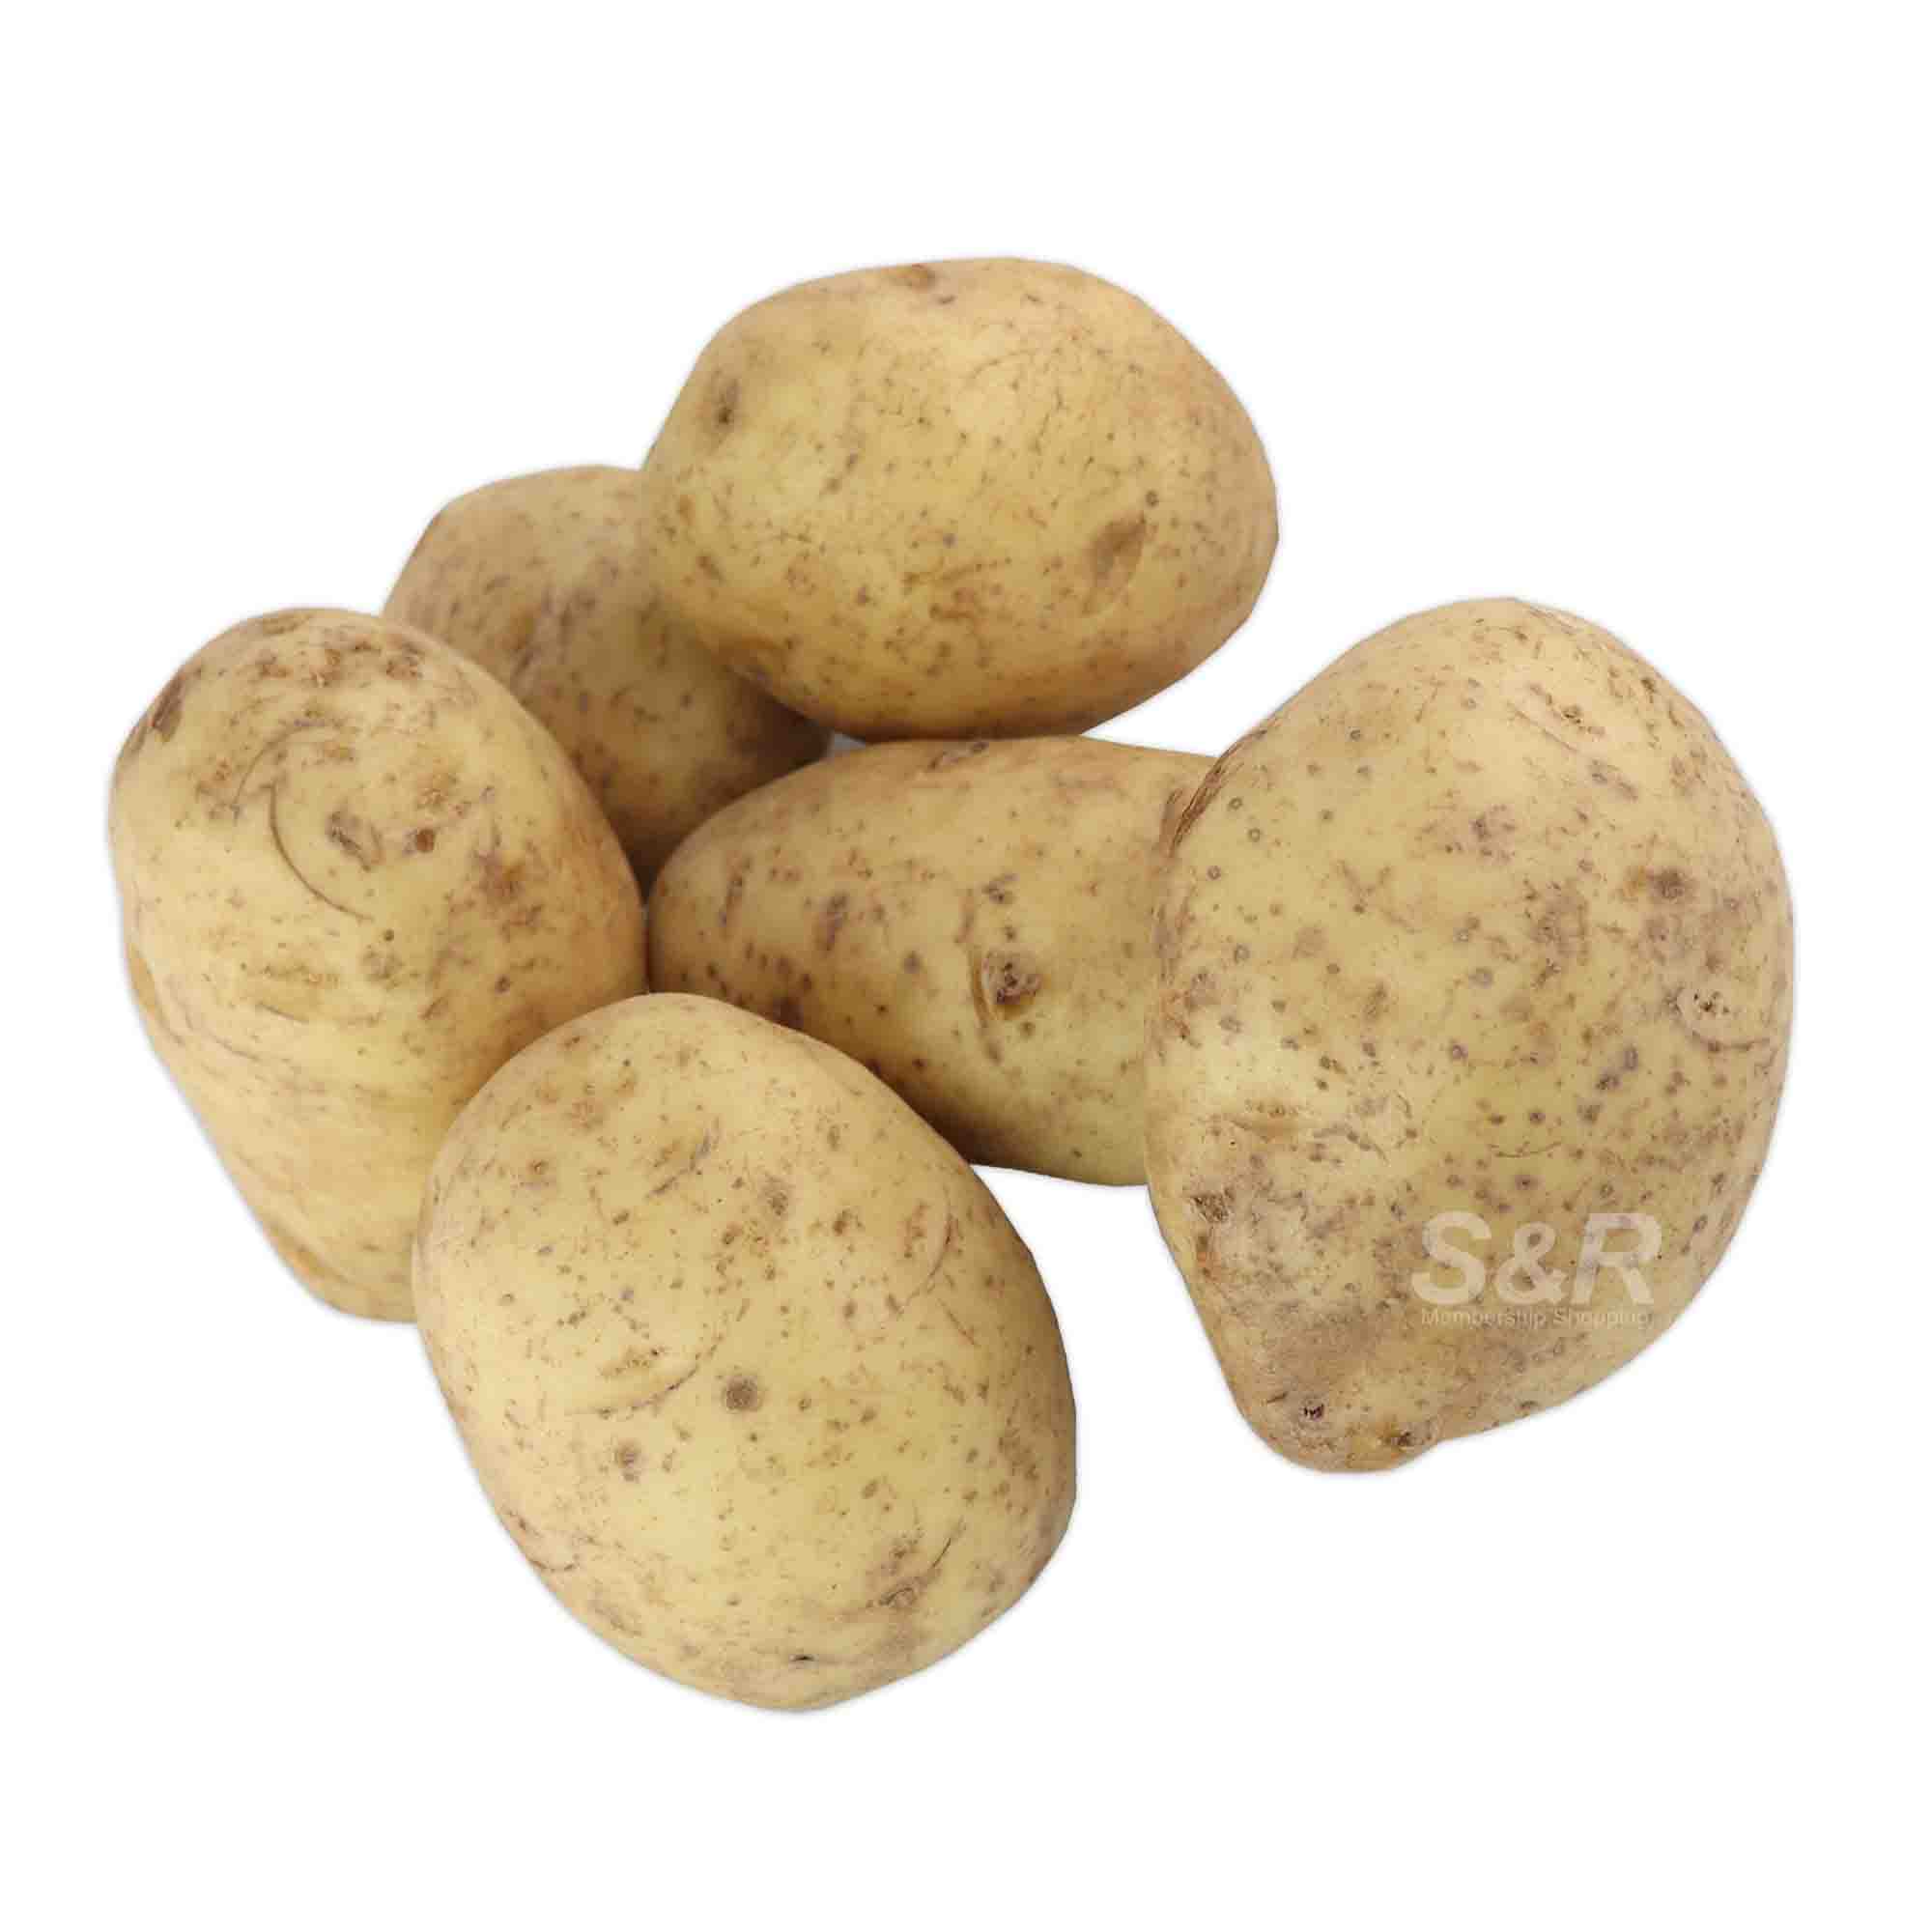 S&R Medium Potato approx. 1.5kg